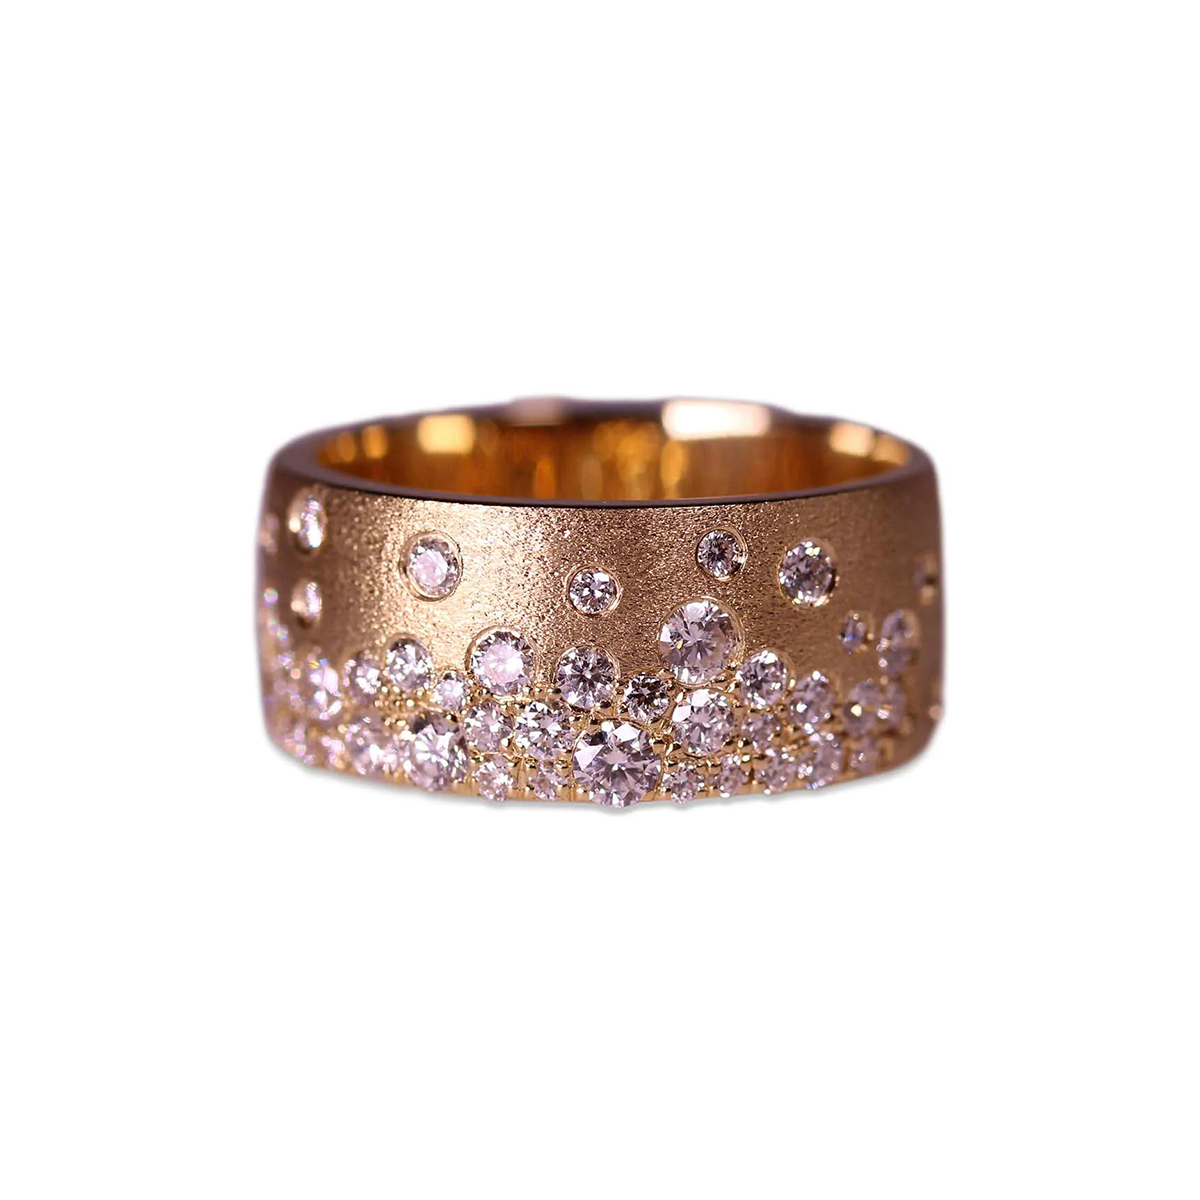 I. Gorman 18k gold and diamond “Cluster” cigar band, $5,250 at I. Gorman Jewelers